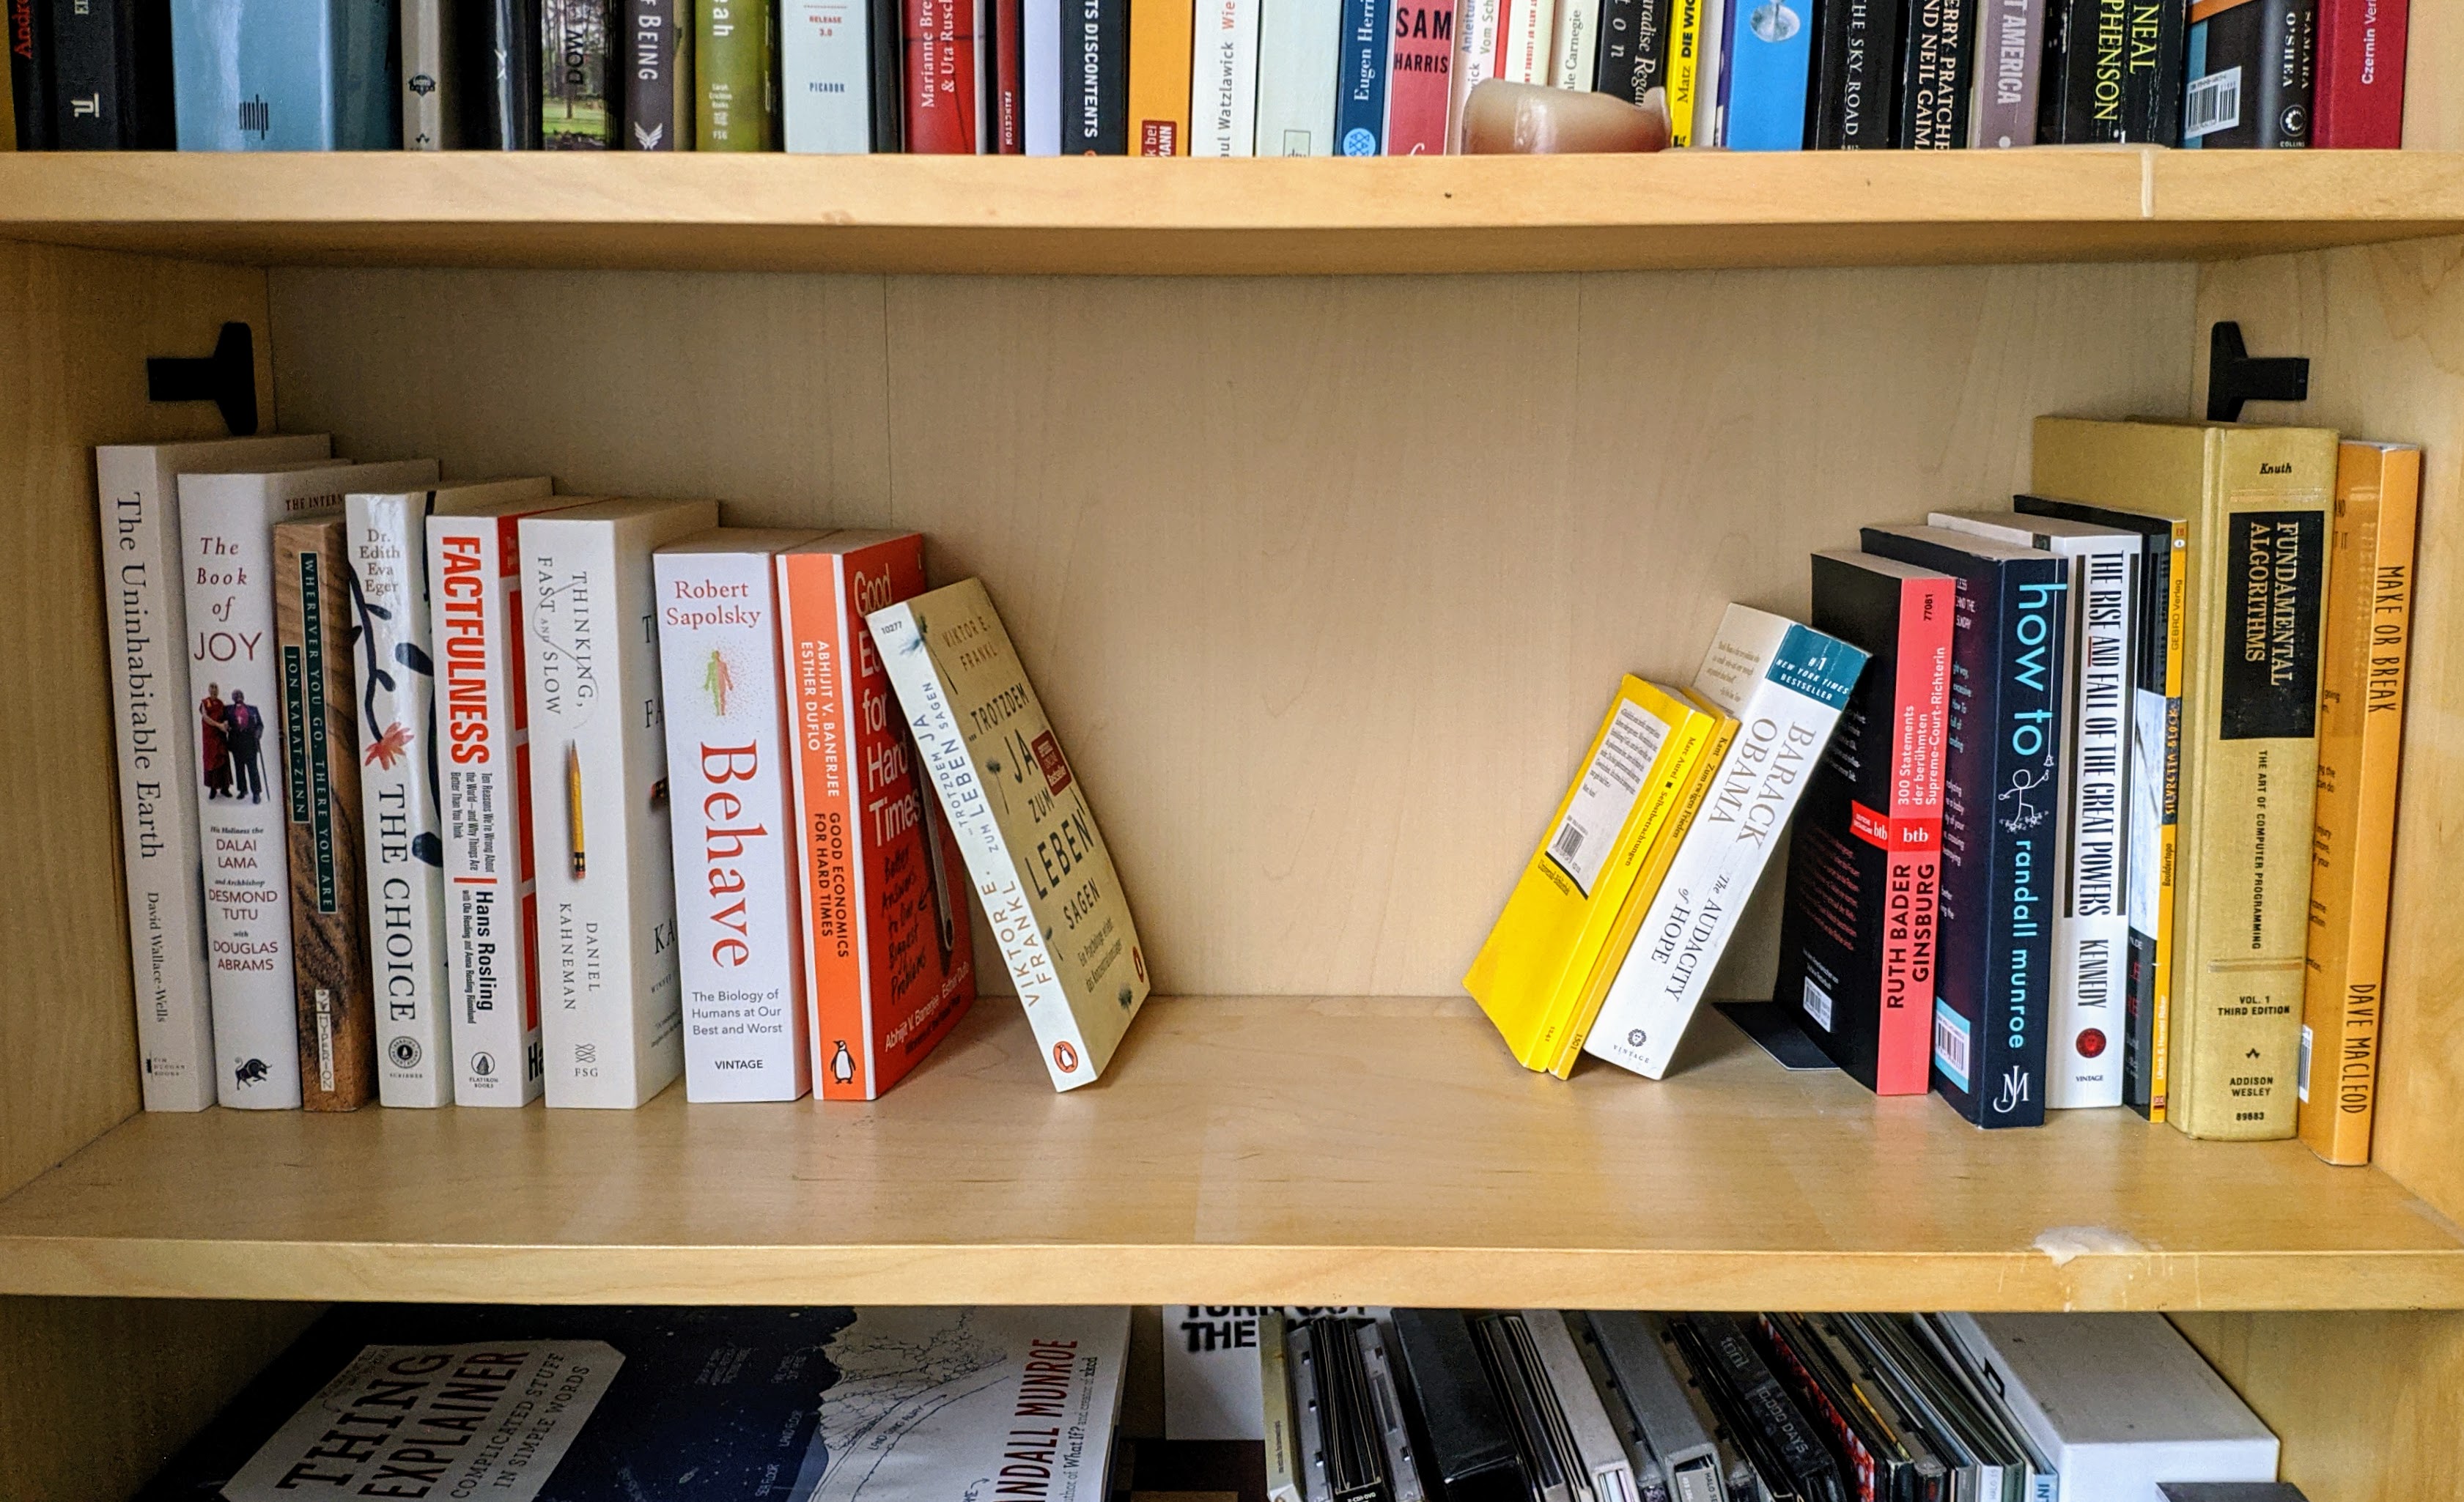 The newly started bookshelf